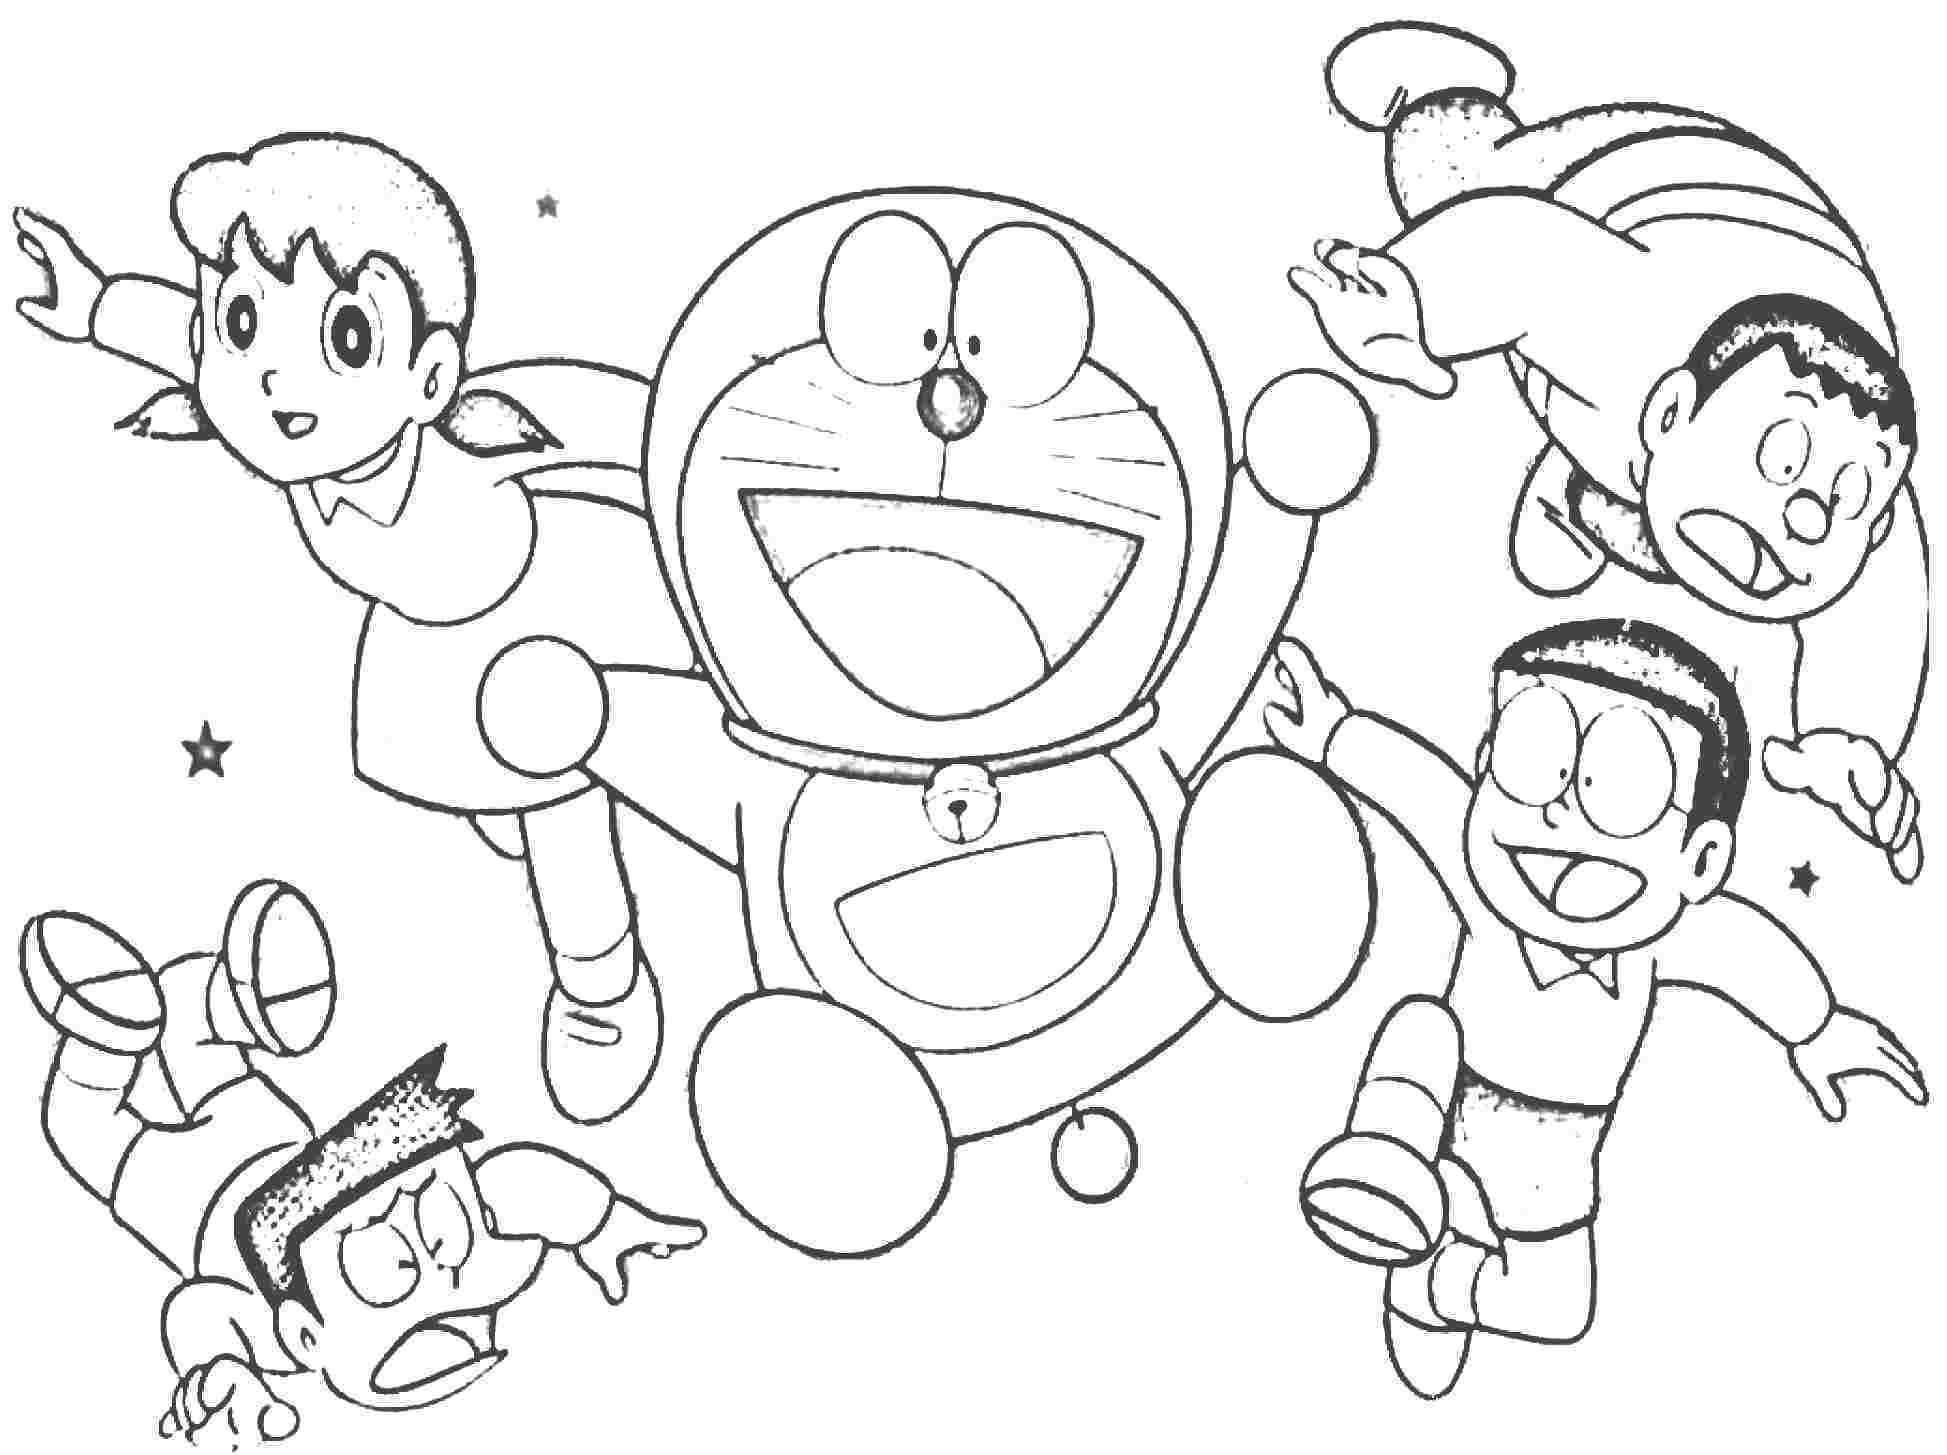 Download Dibujos de Doraemon para Colorear - DibujosOnline.Net